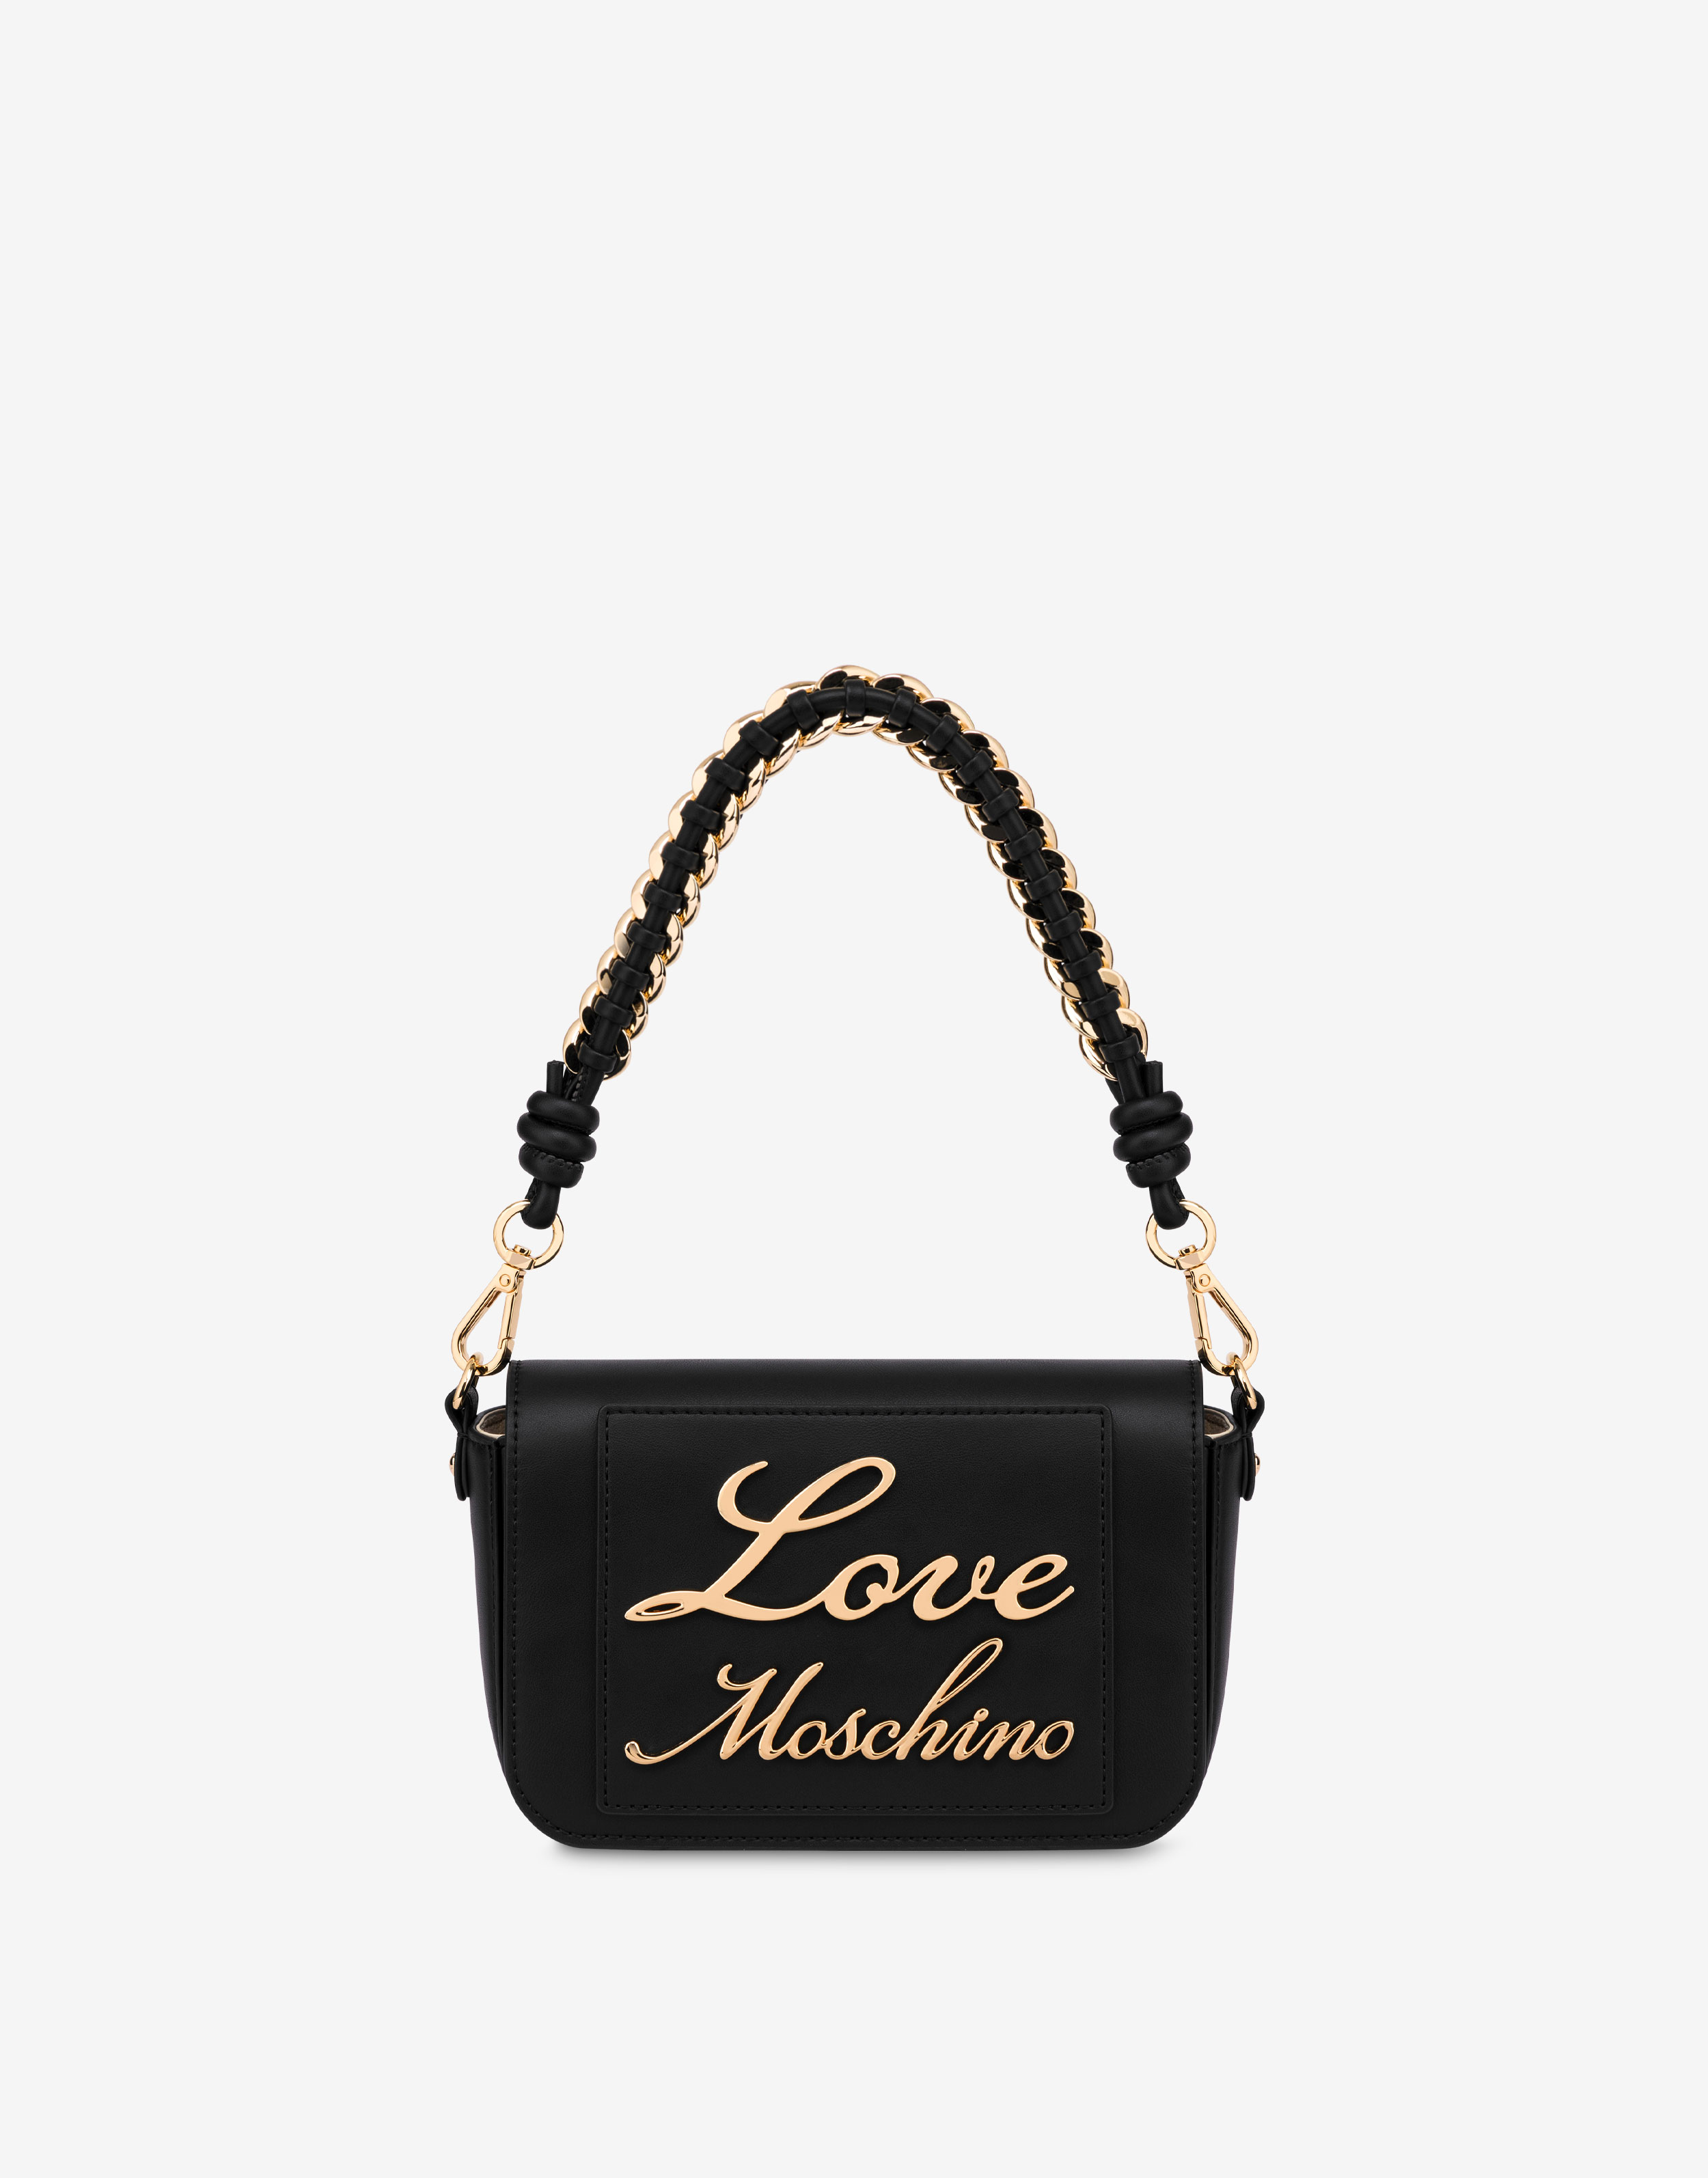 Moschino Bags & Handbags for Kids sale - discounted price | FASHIOLA INDIA